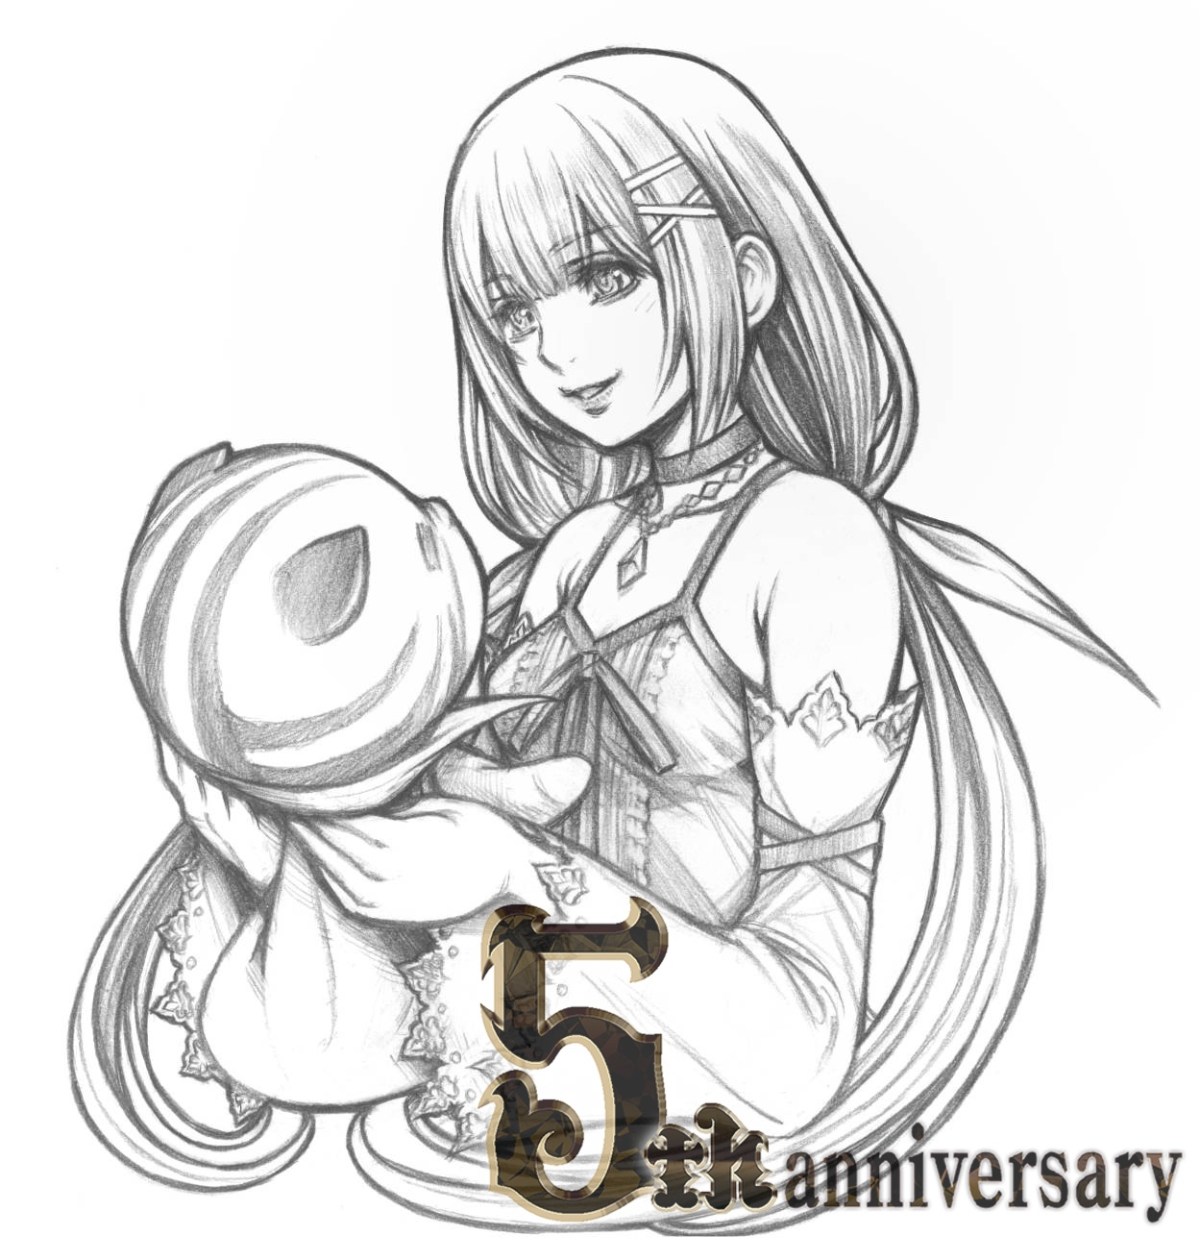 Kingdom Hearts Union X 5th Anniversary Message and Illustration from Tetsuya Nomura